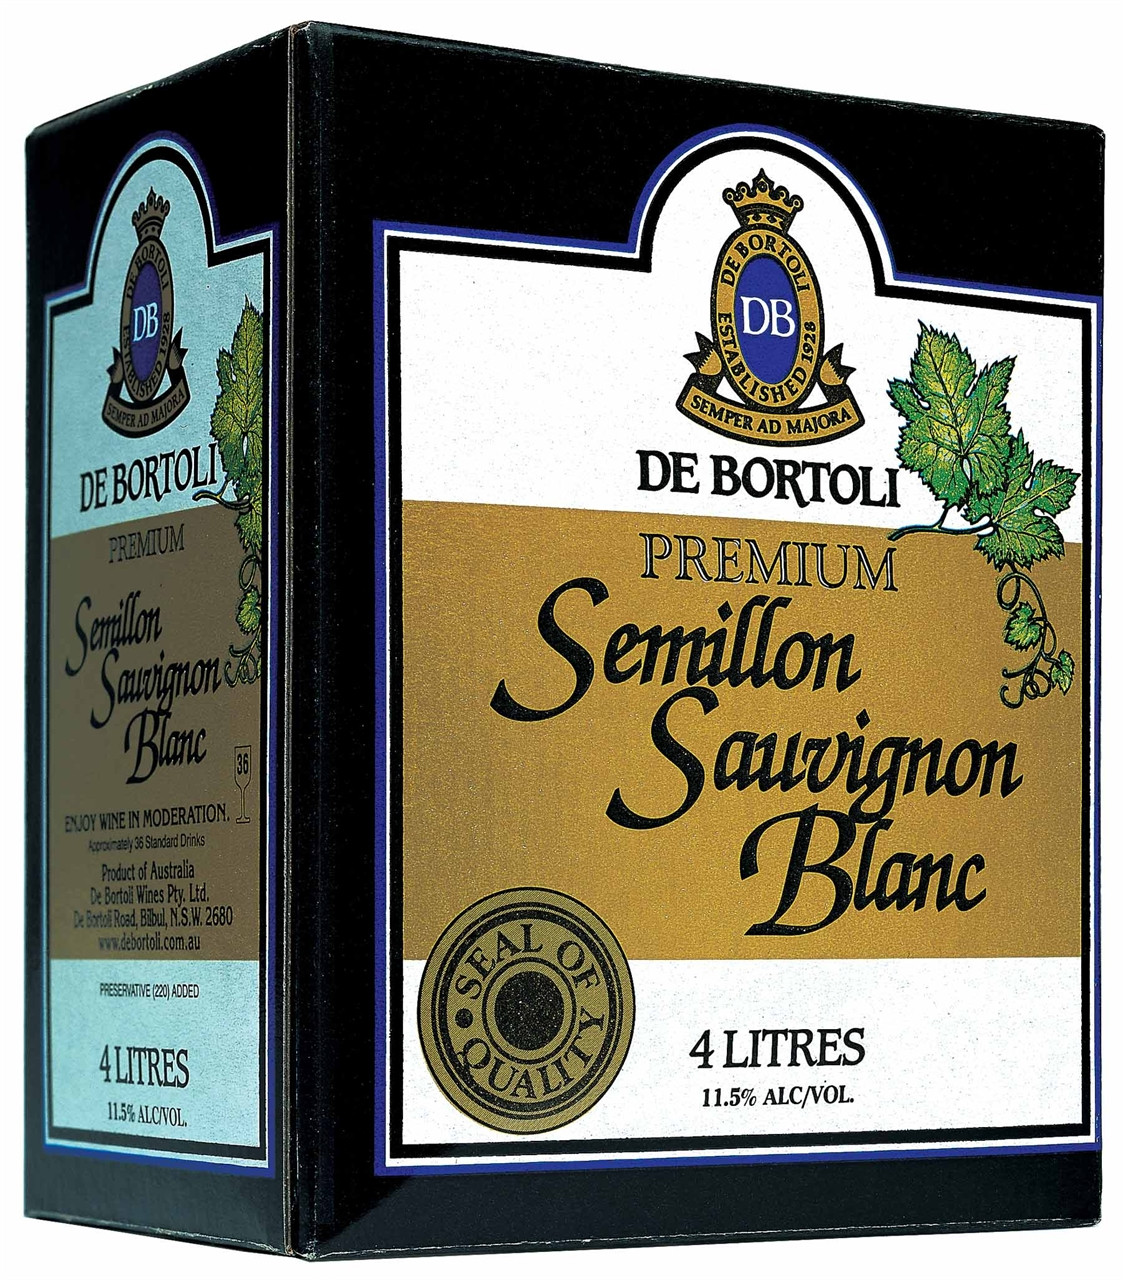 De Bortolis Premium Semillon Sauvignon Blanc 4lt Cask